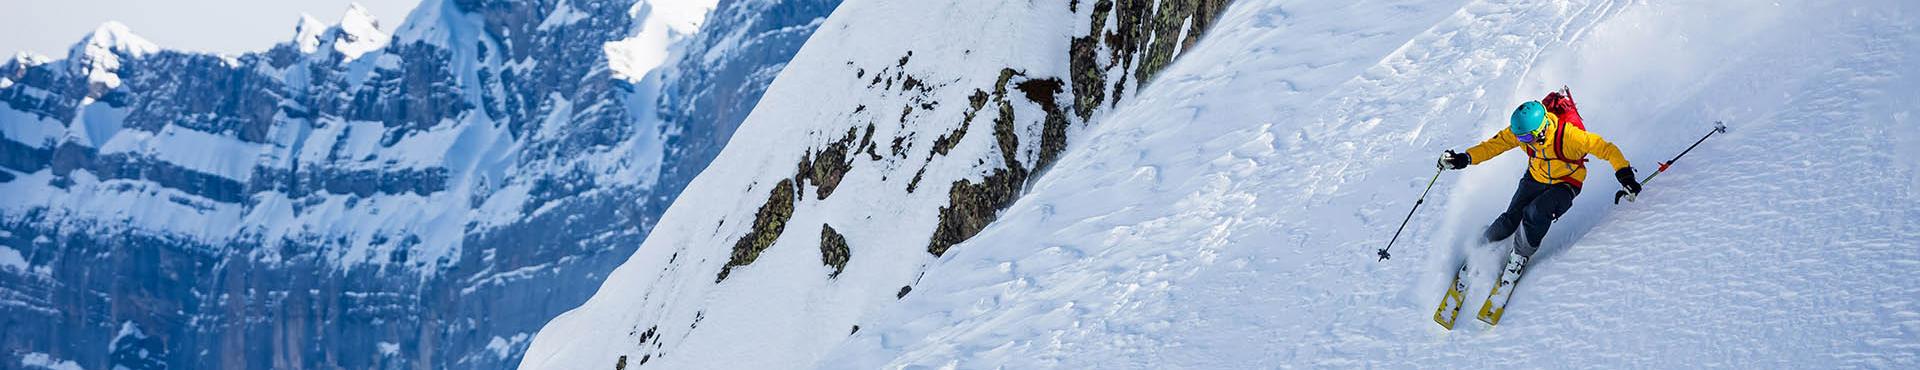 Freeride skieur descente extreme